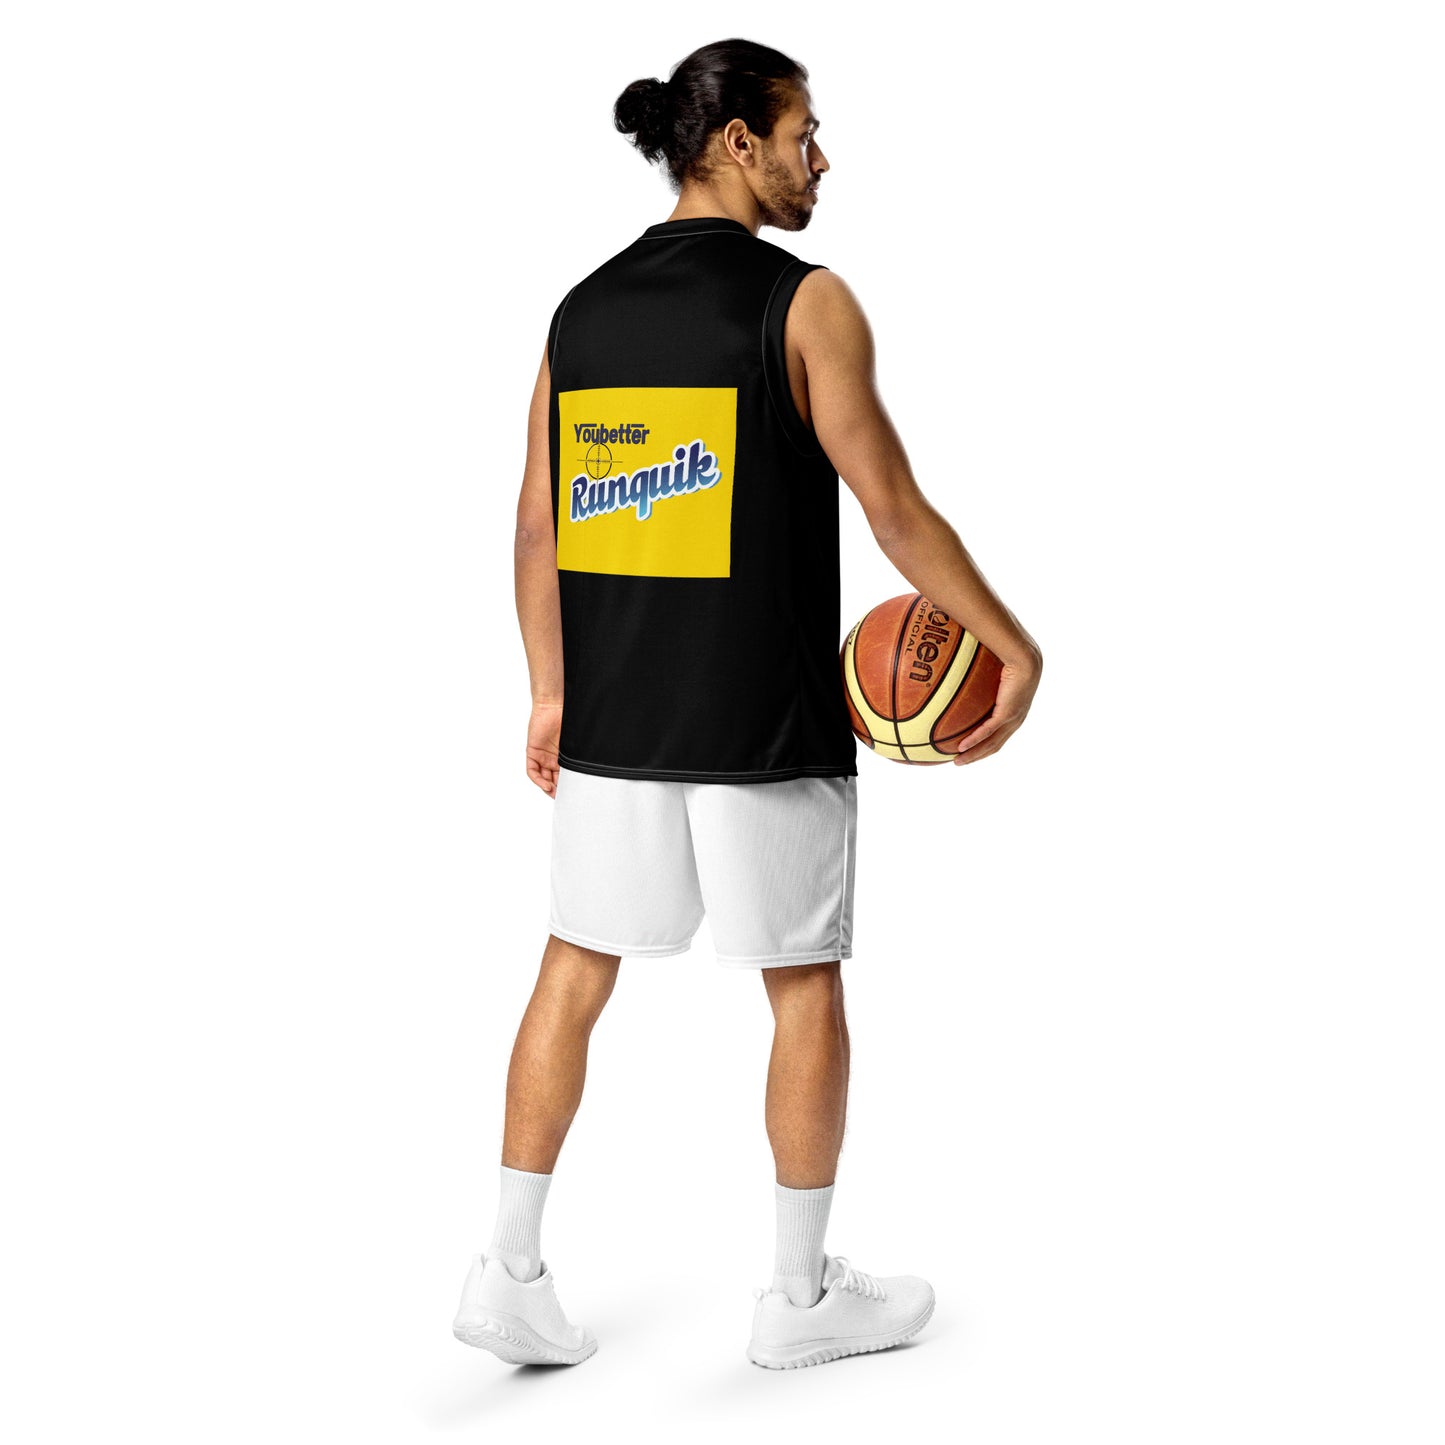 YouBetter RunQuick Recycled unisex basketball jersey